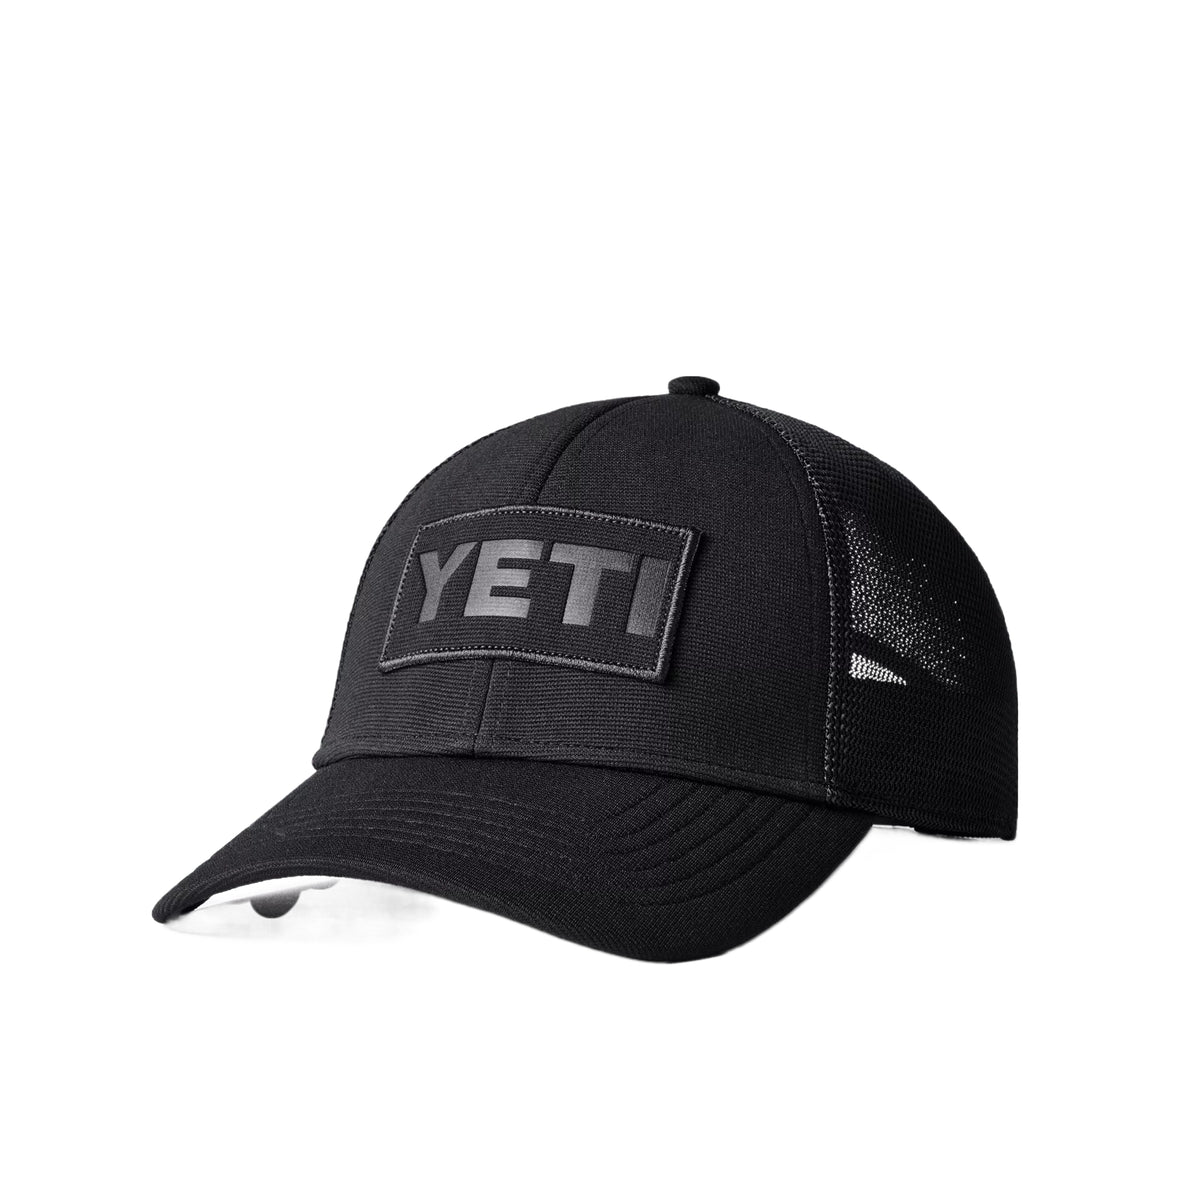 Yeti Cap Trucker Black On Black Patch